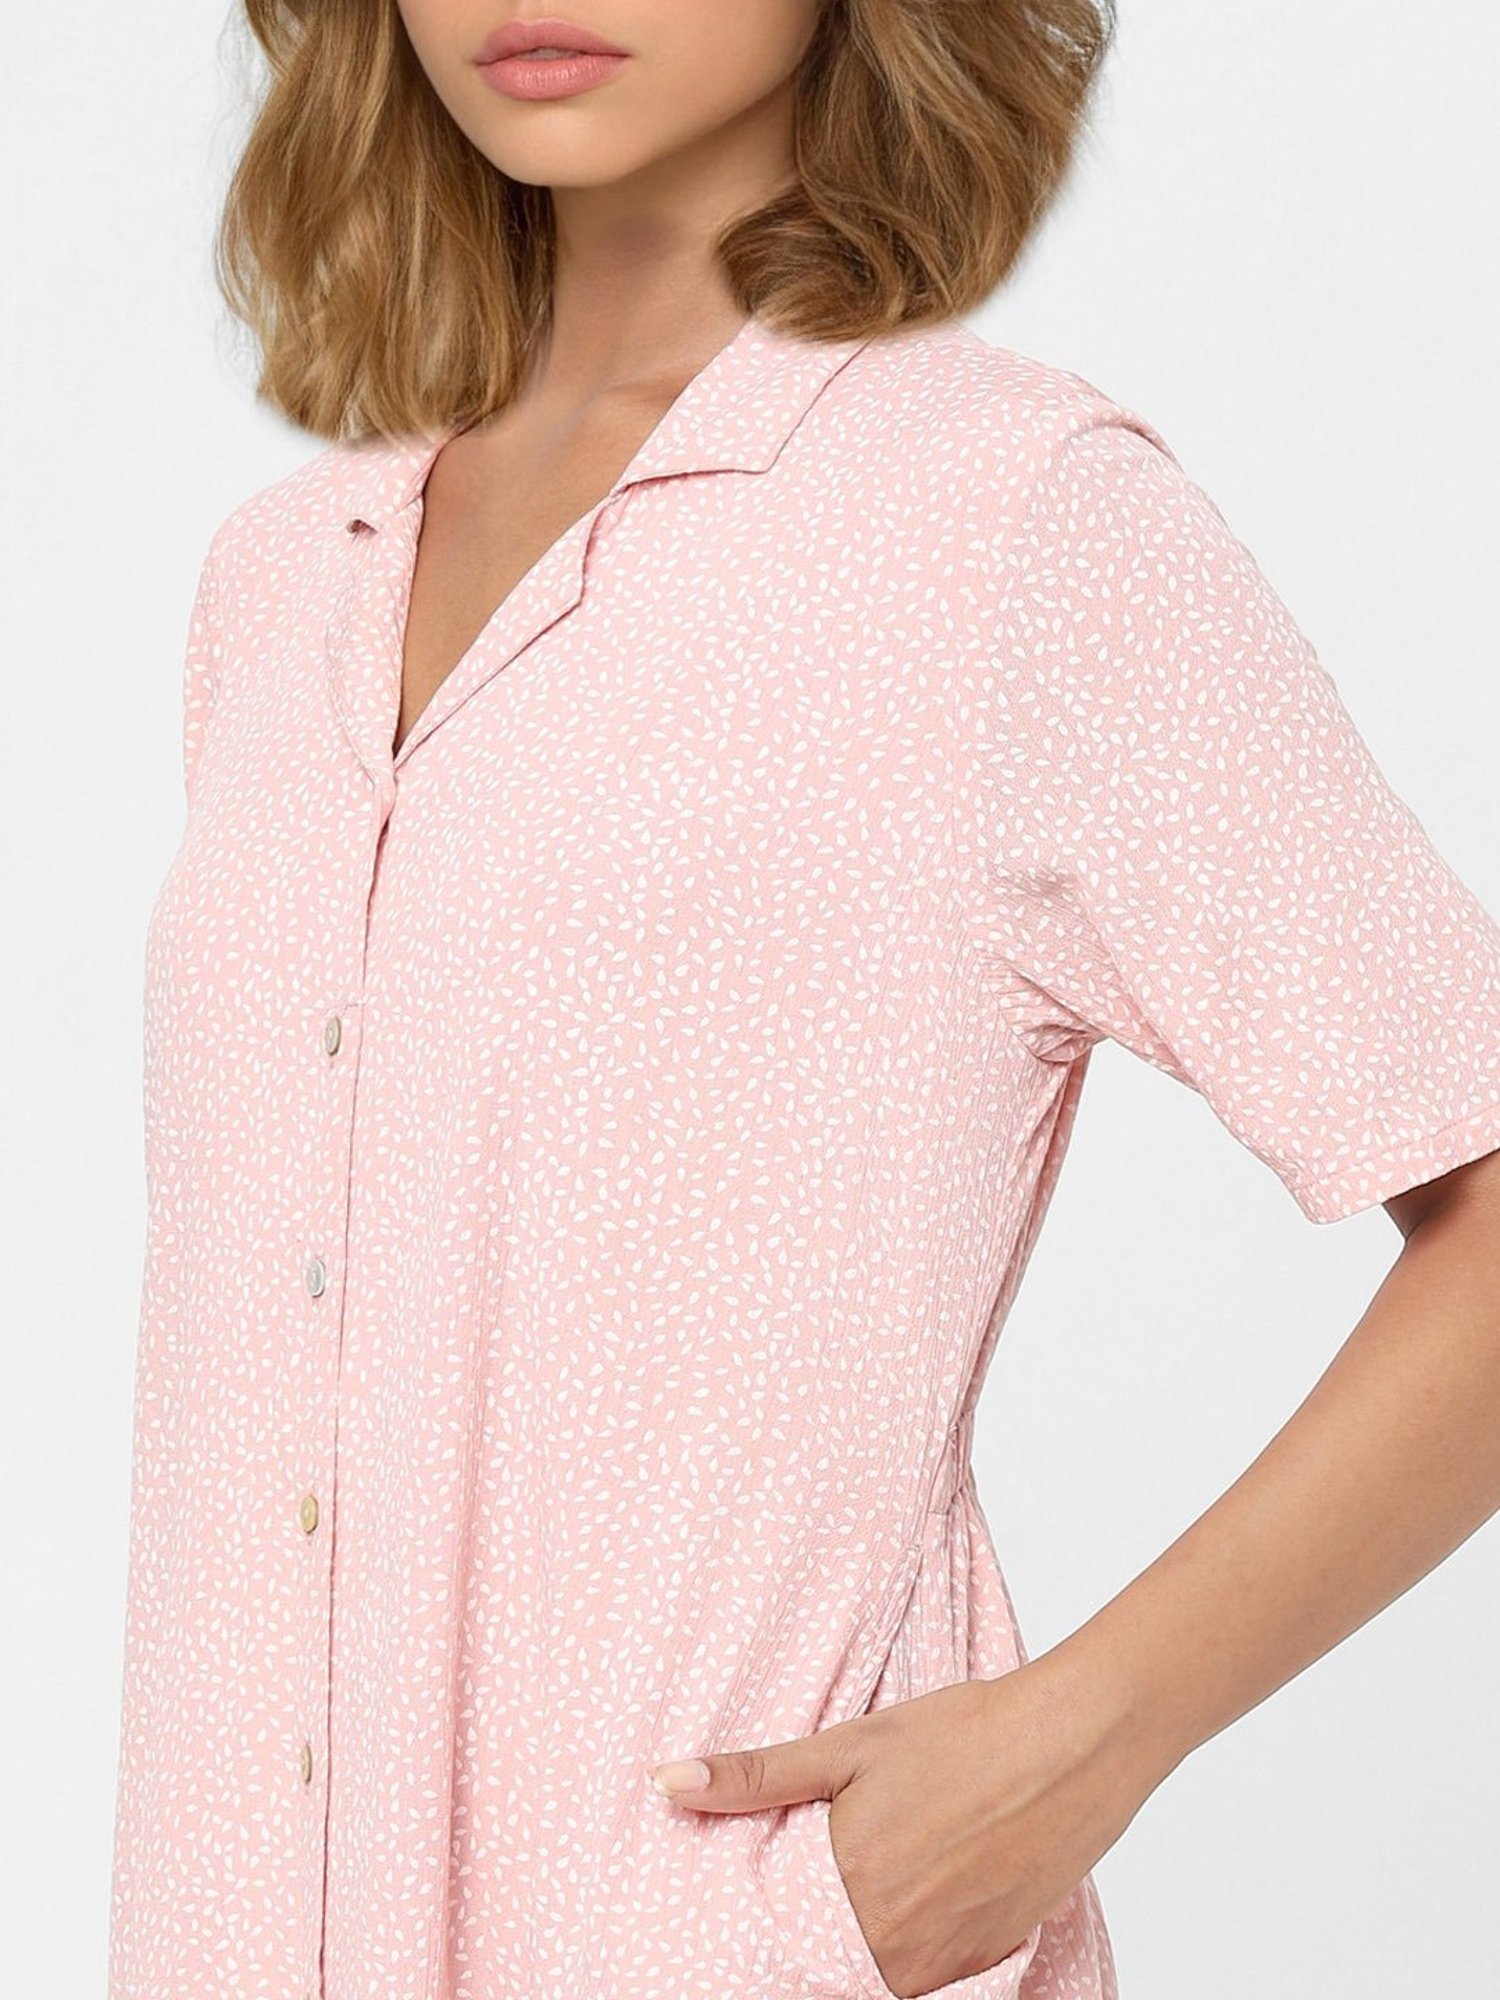 LFH Trendy Designer Stylish Ladies Shirt Pink Color DN 107